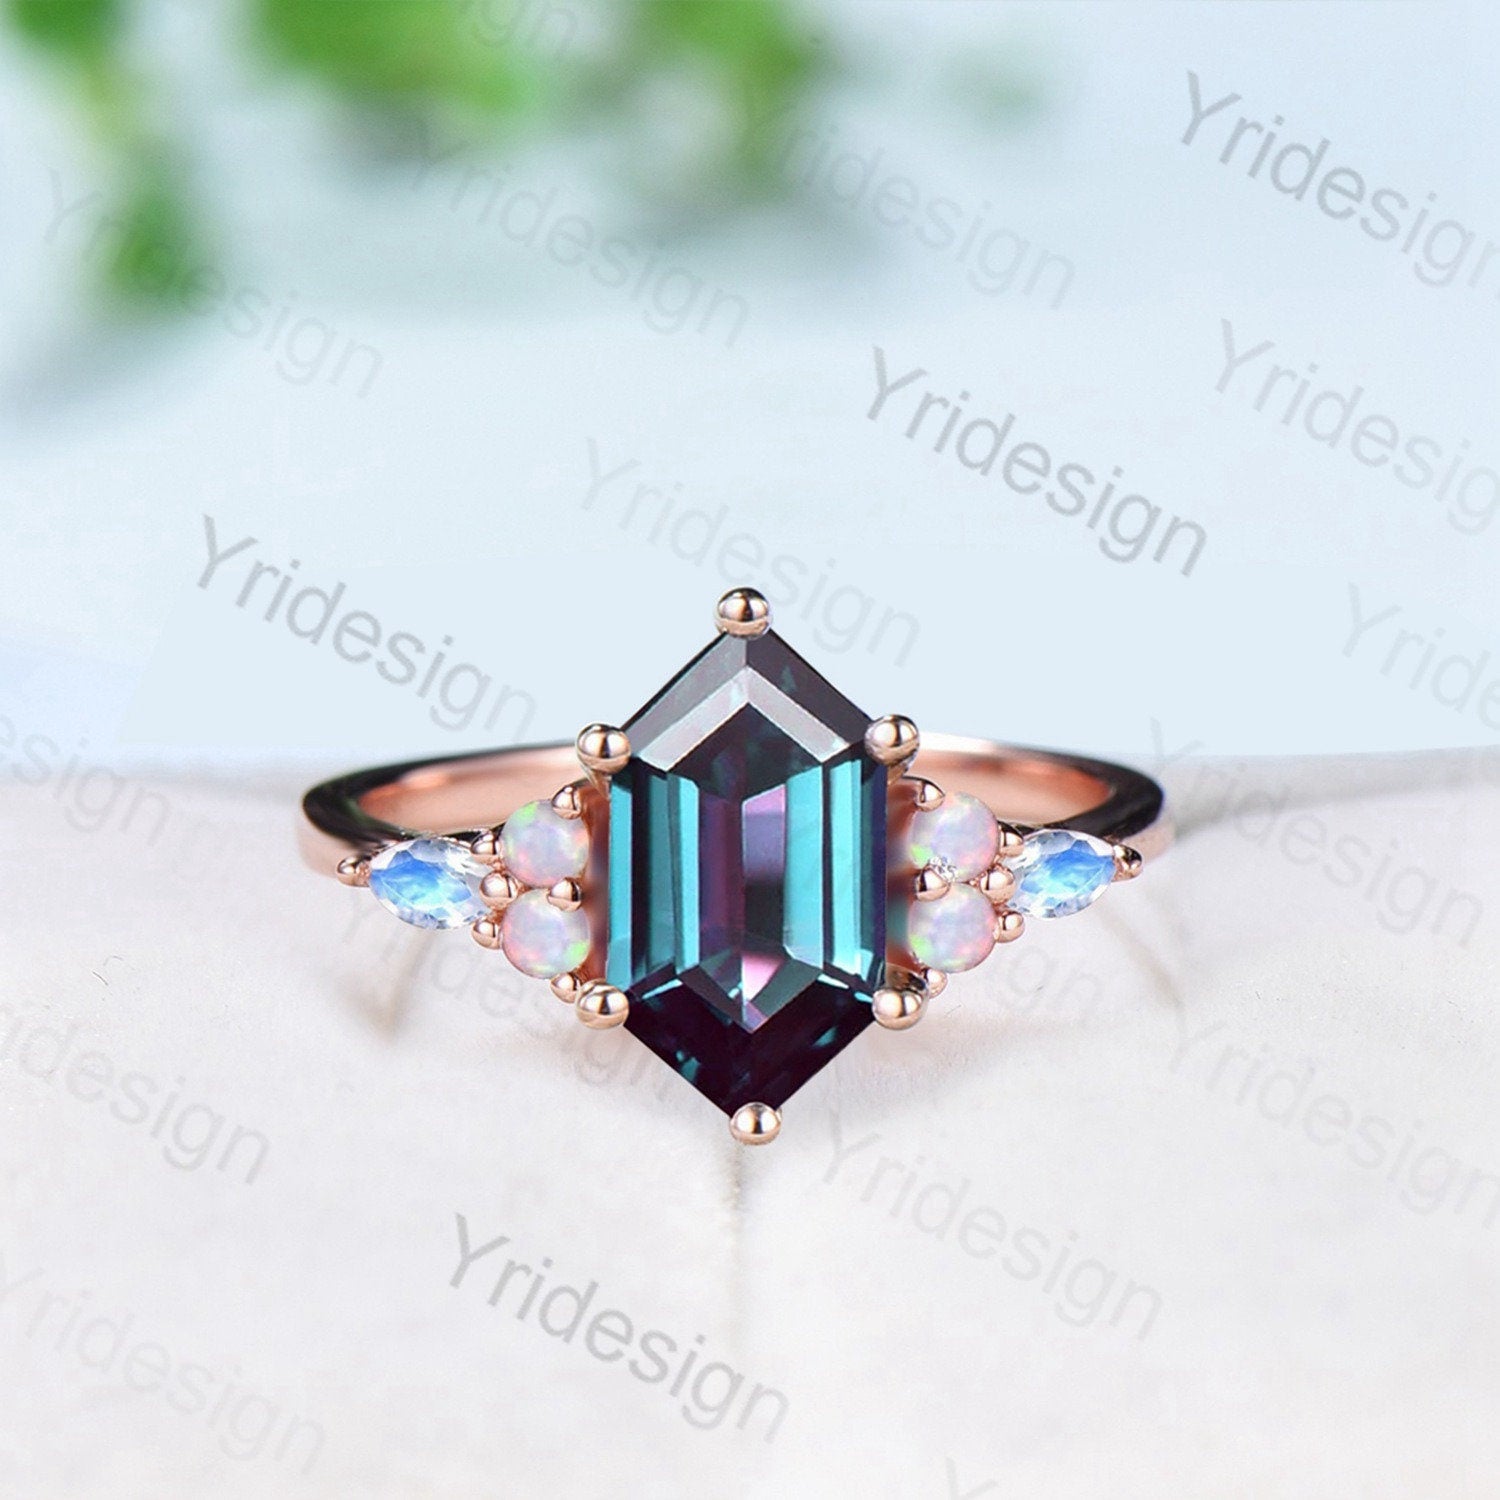 Vintage Alexandrite Engagement Ring Set Antique Pear Shaped - Etsy |  Alexandrite engagement ring, Engagement ring shapes, Opal wedding ring set